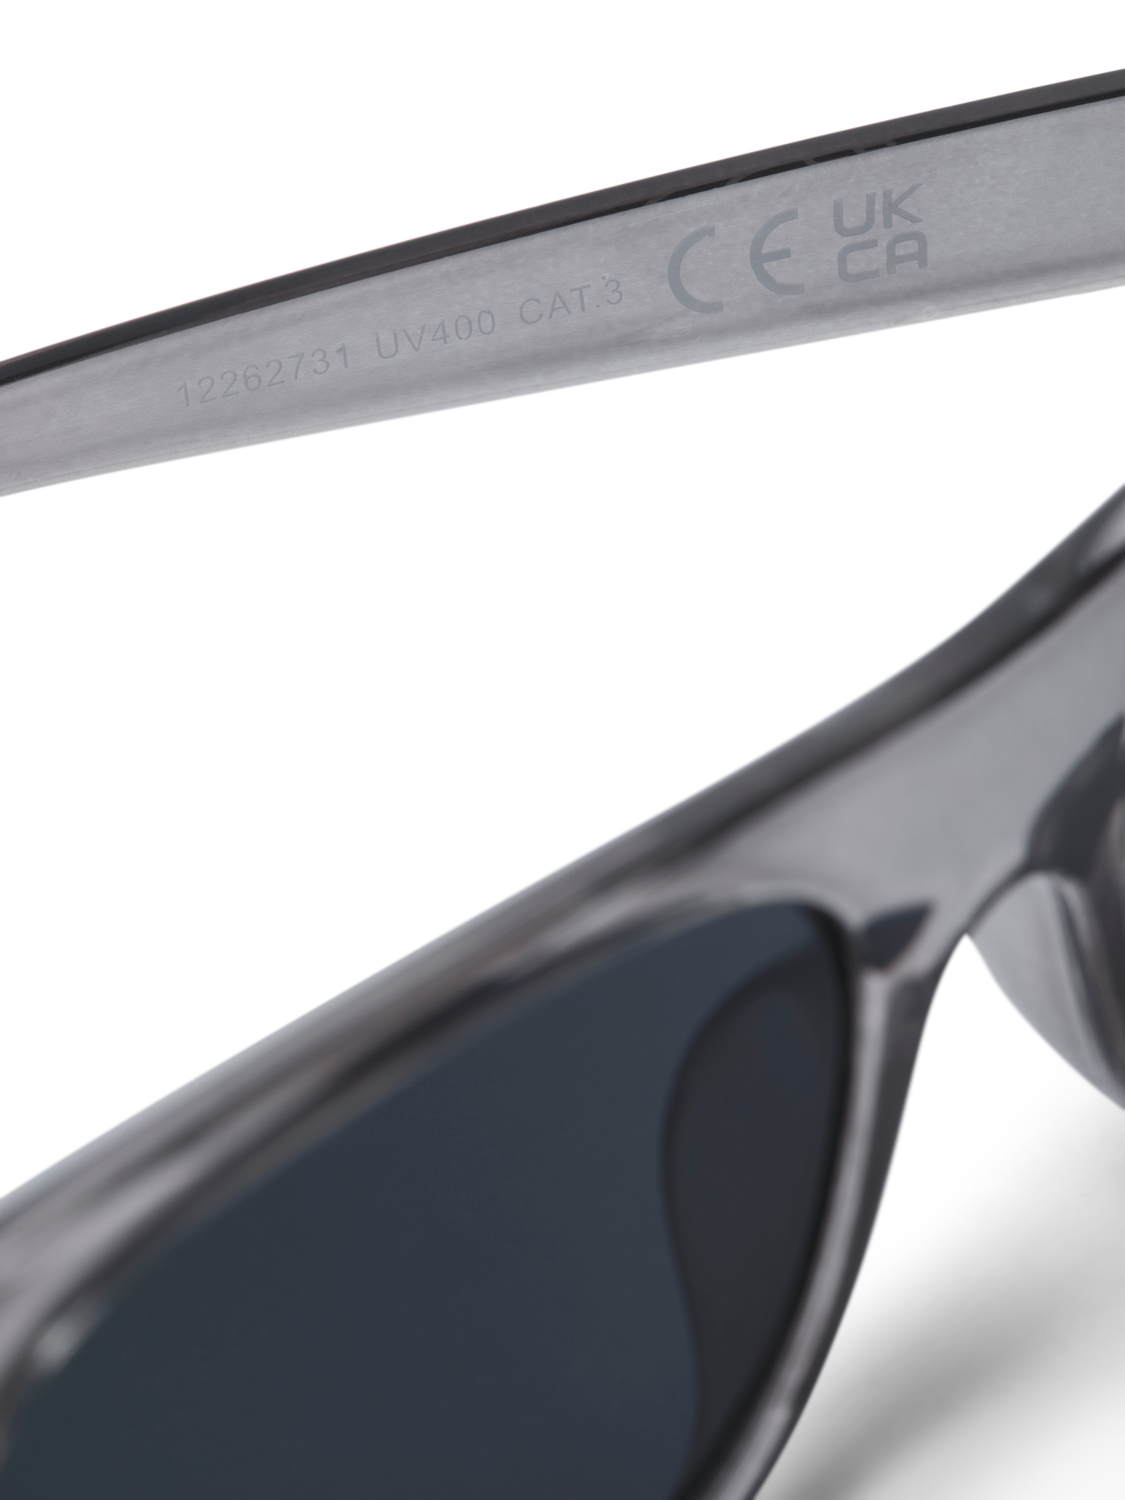 Jack & Jones Plastic Rectangular sunglasses -Light Grey Denim - 12262731